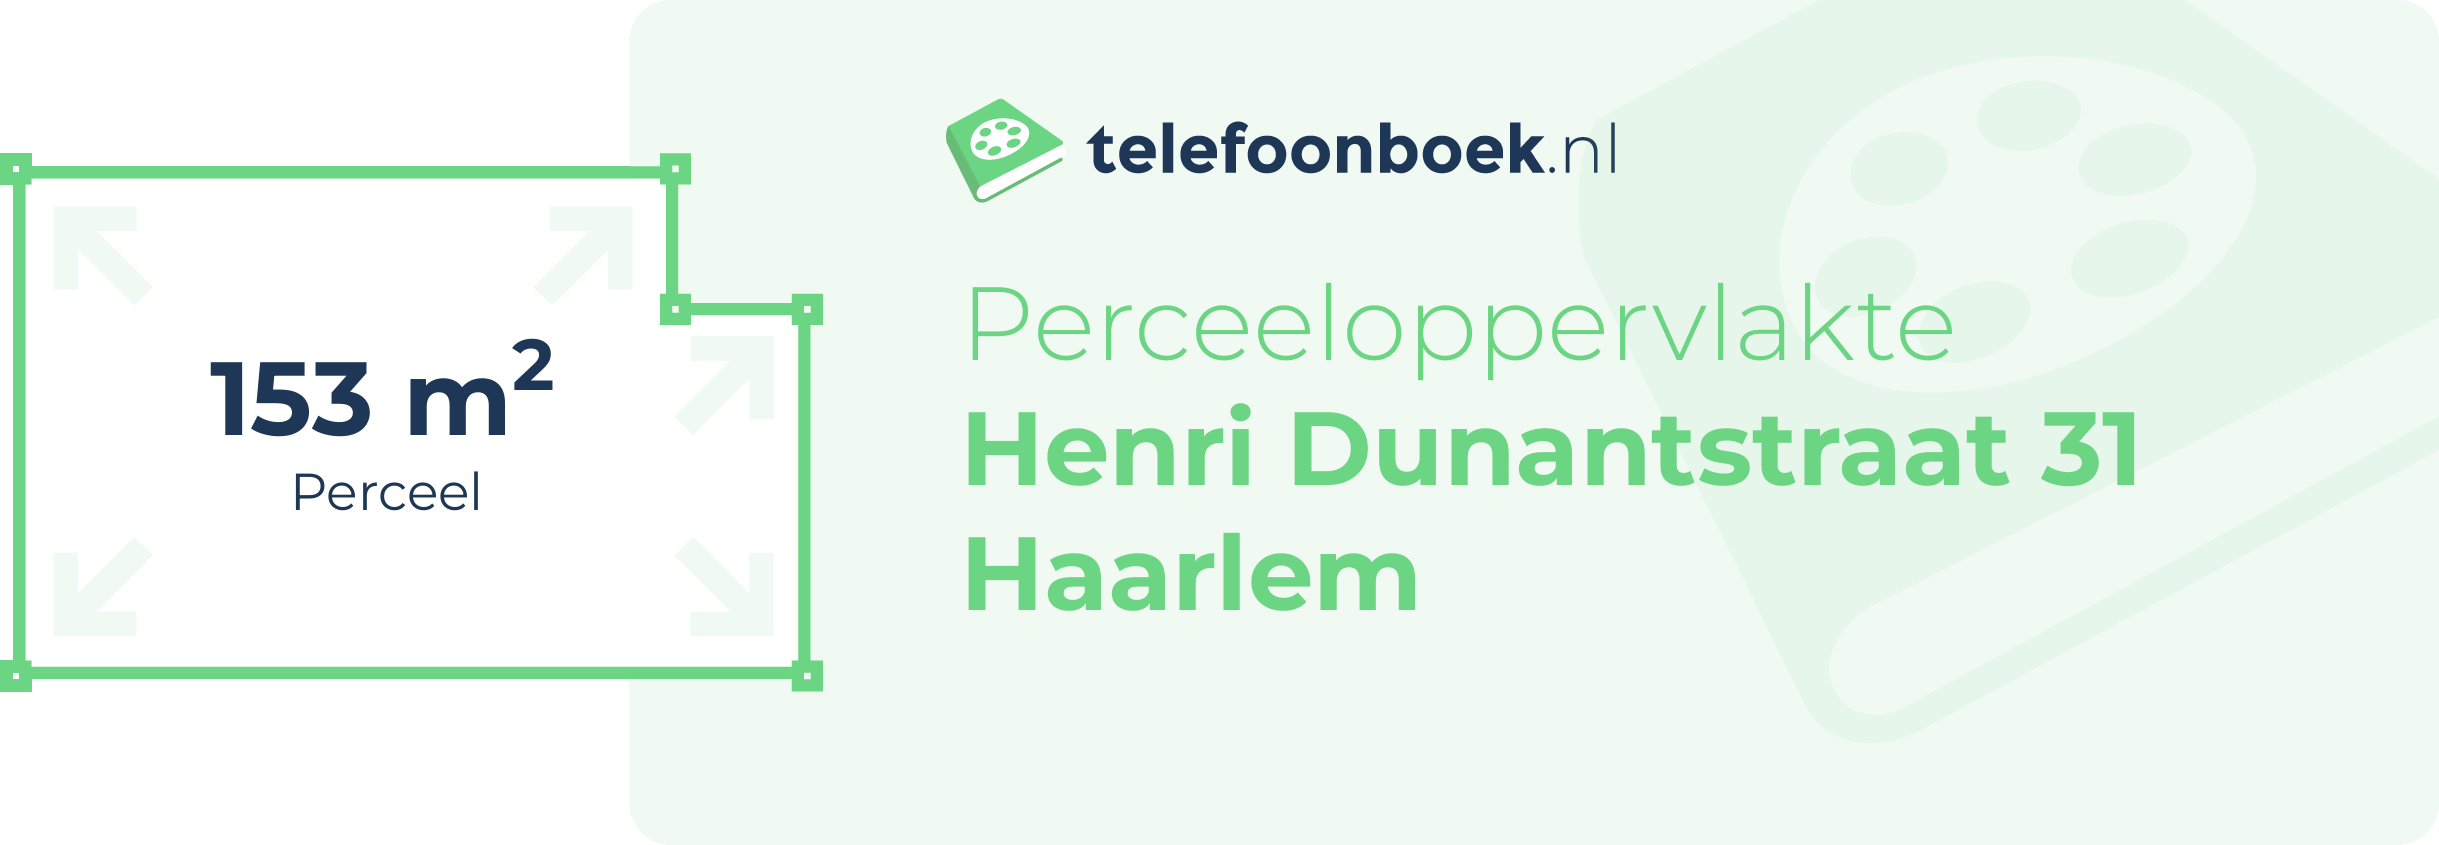 Perceeloppervlakte Henri Dunantstraat 31 Haarlem